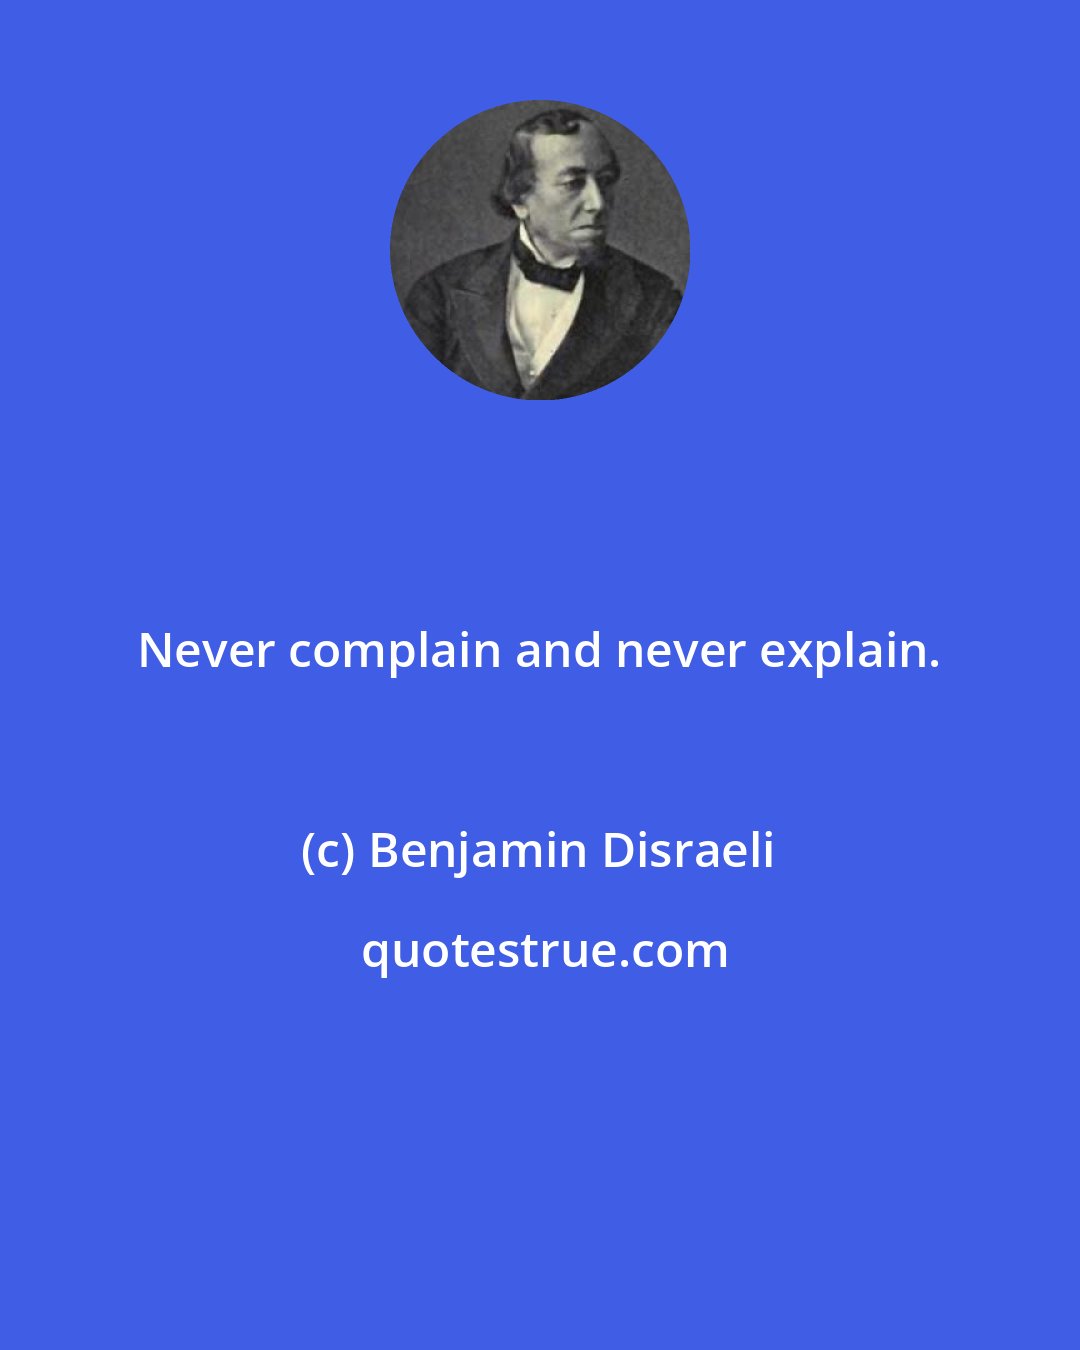 Benjamin Disraeli: Never complain and never explain.